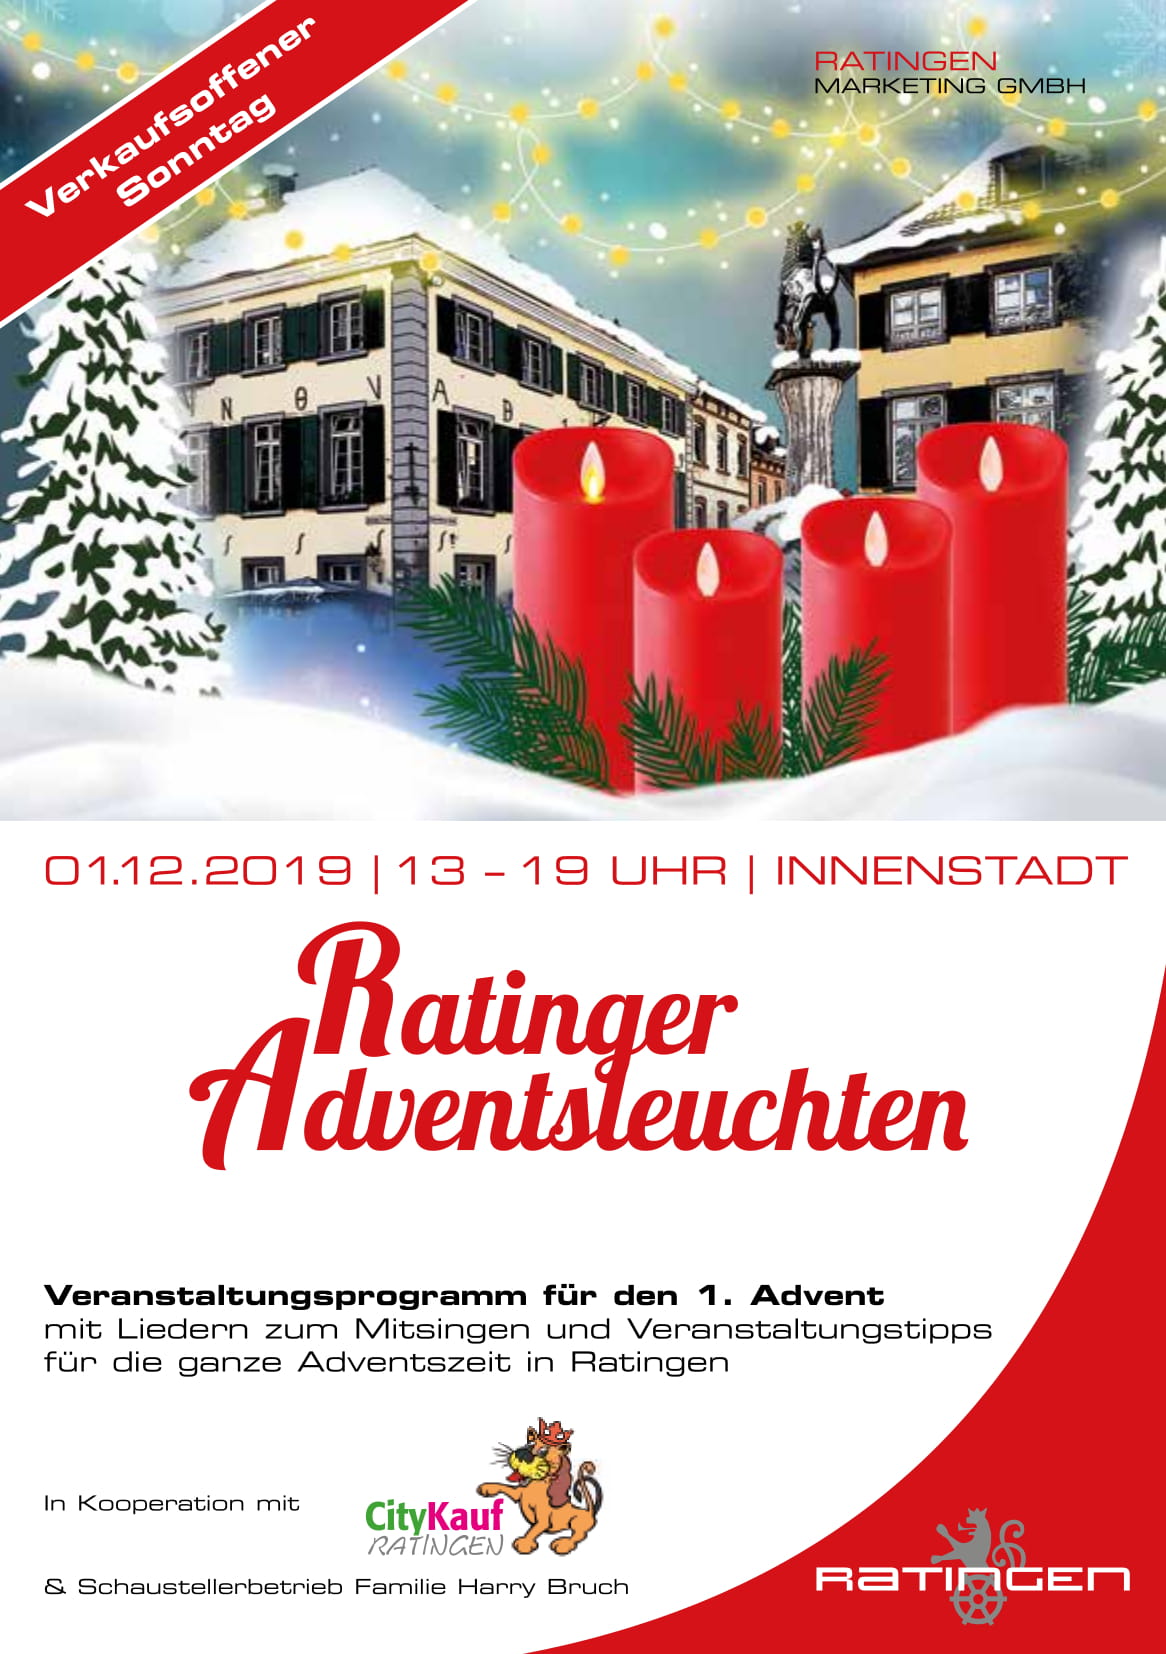 Ratinger_Adventsleuchten_Programmheft_A5-01.jpg